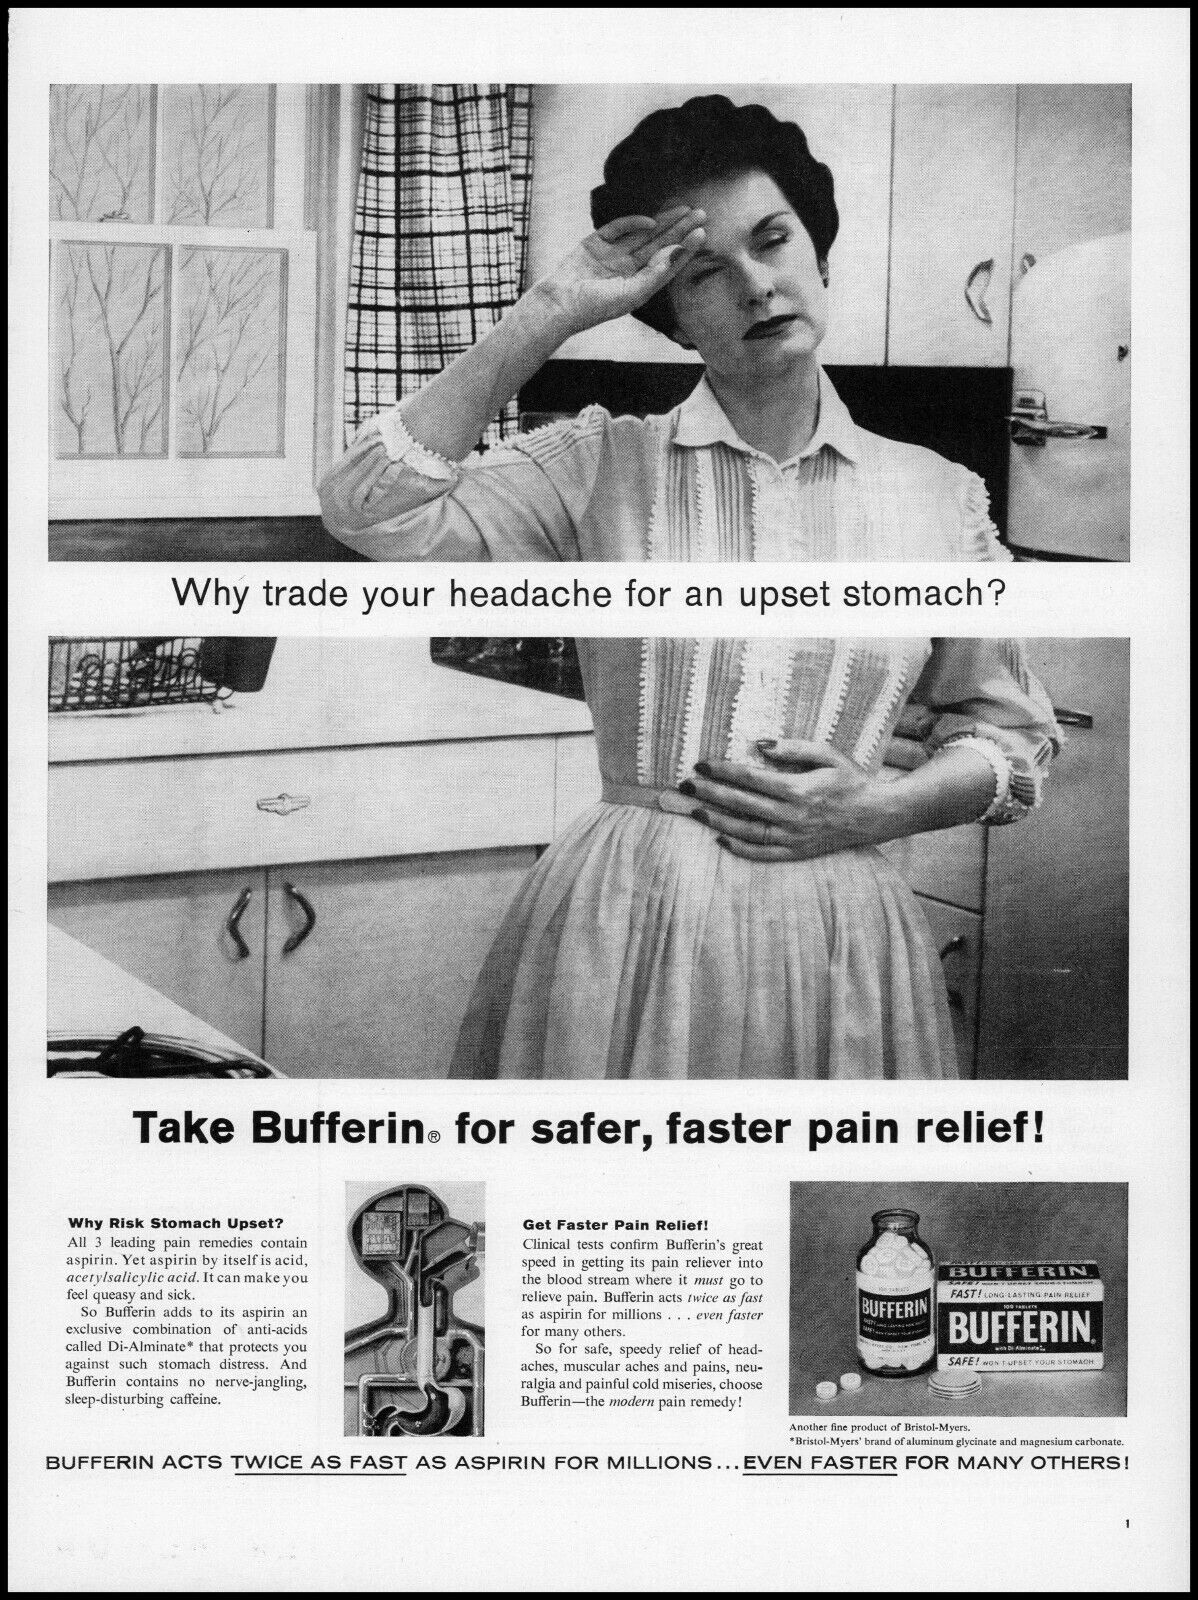 1959 Woman headache upset stomach Bufferin Aspirin retro photo print ad L93